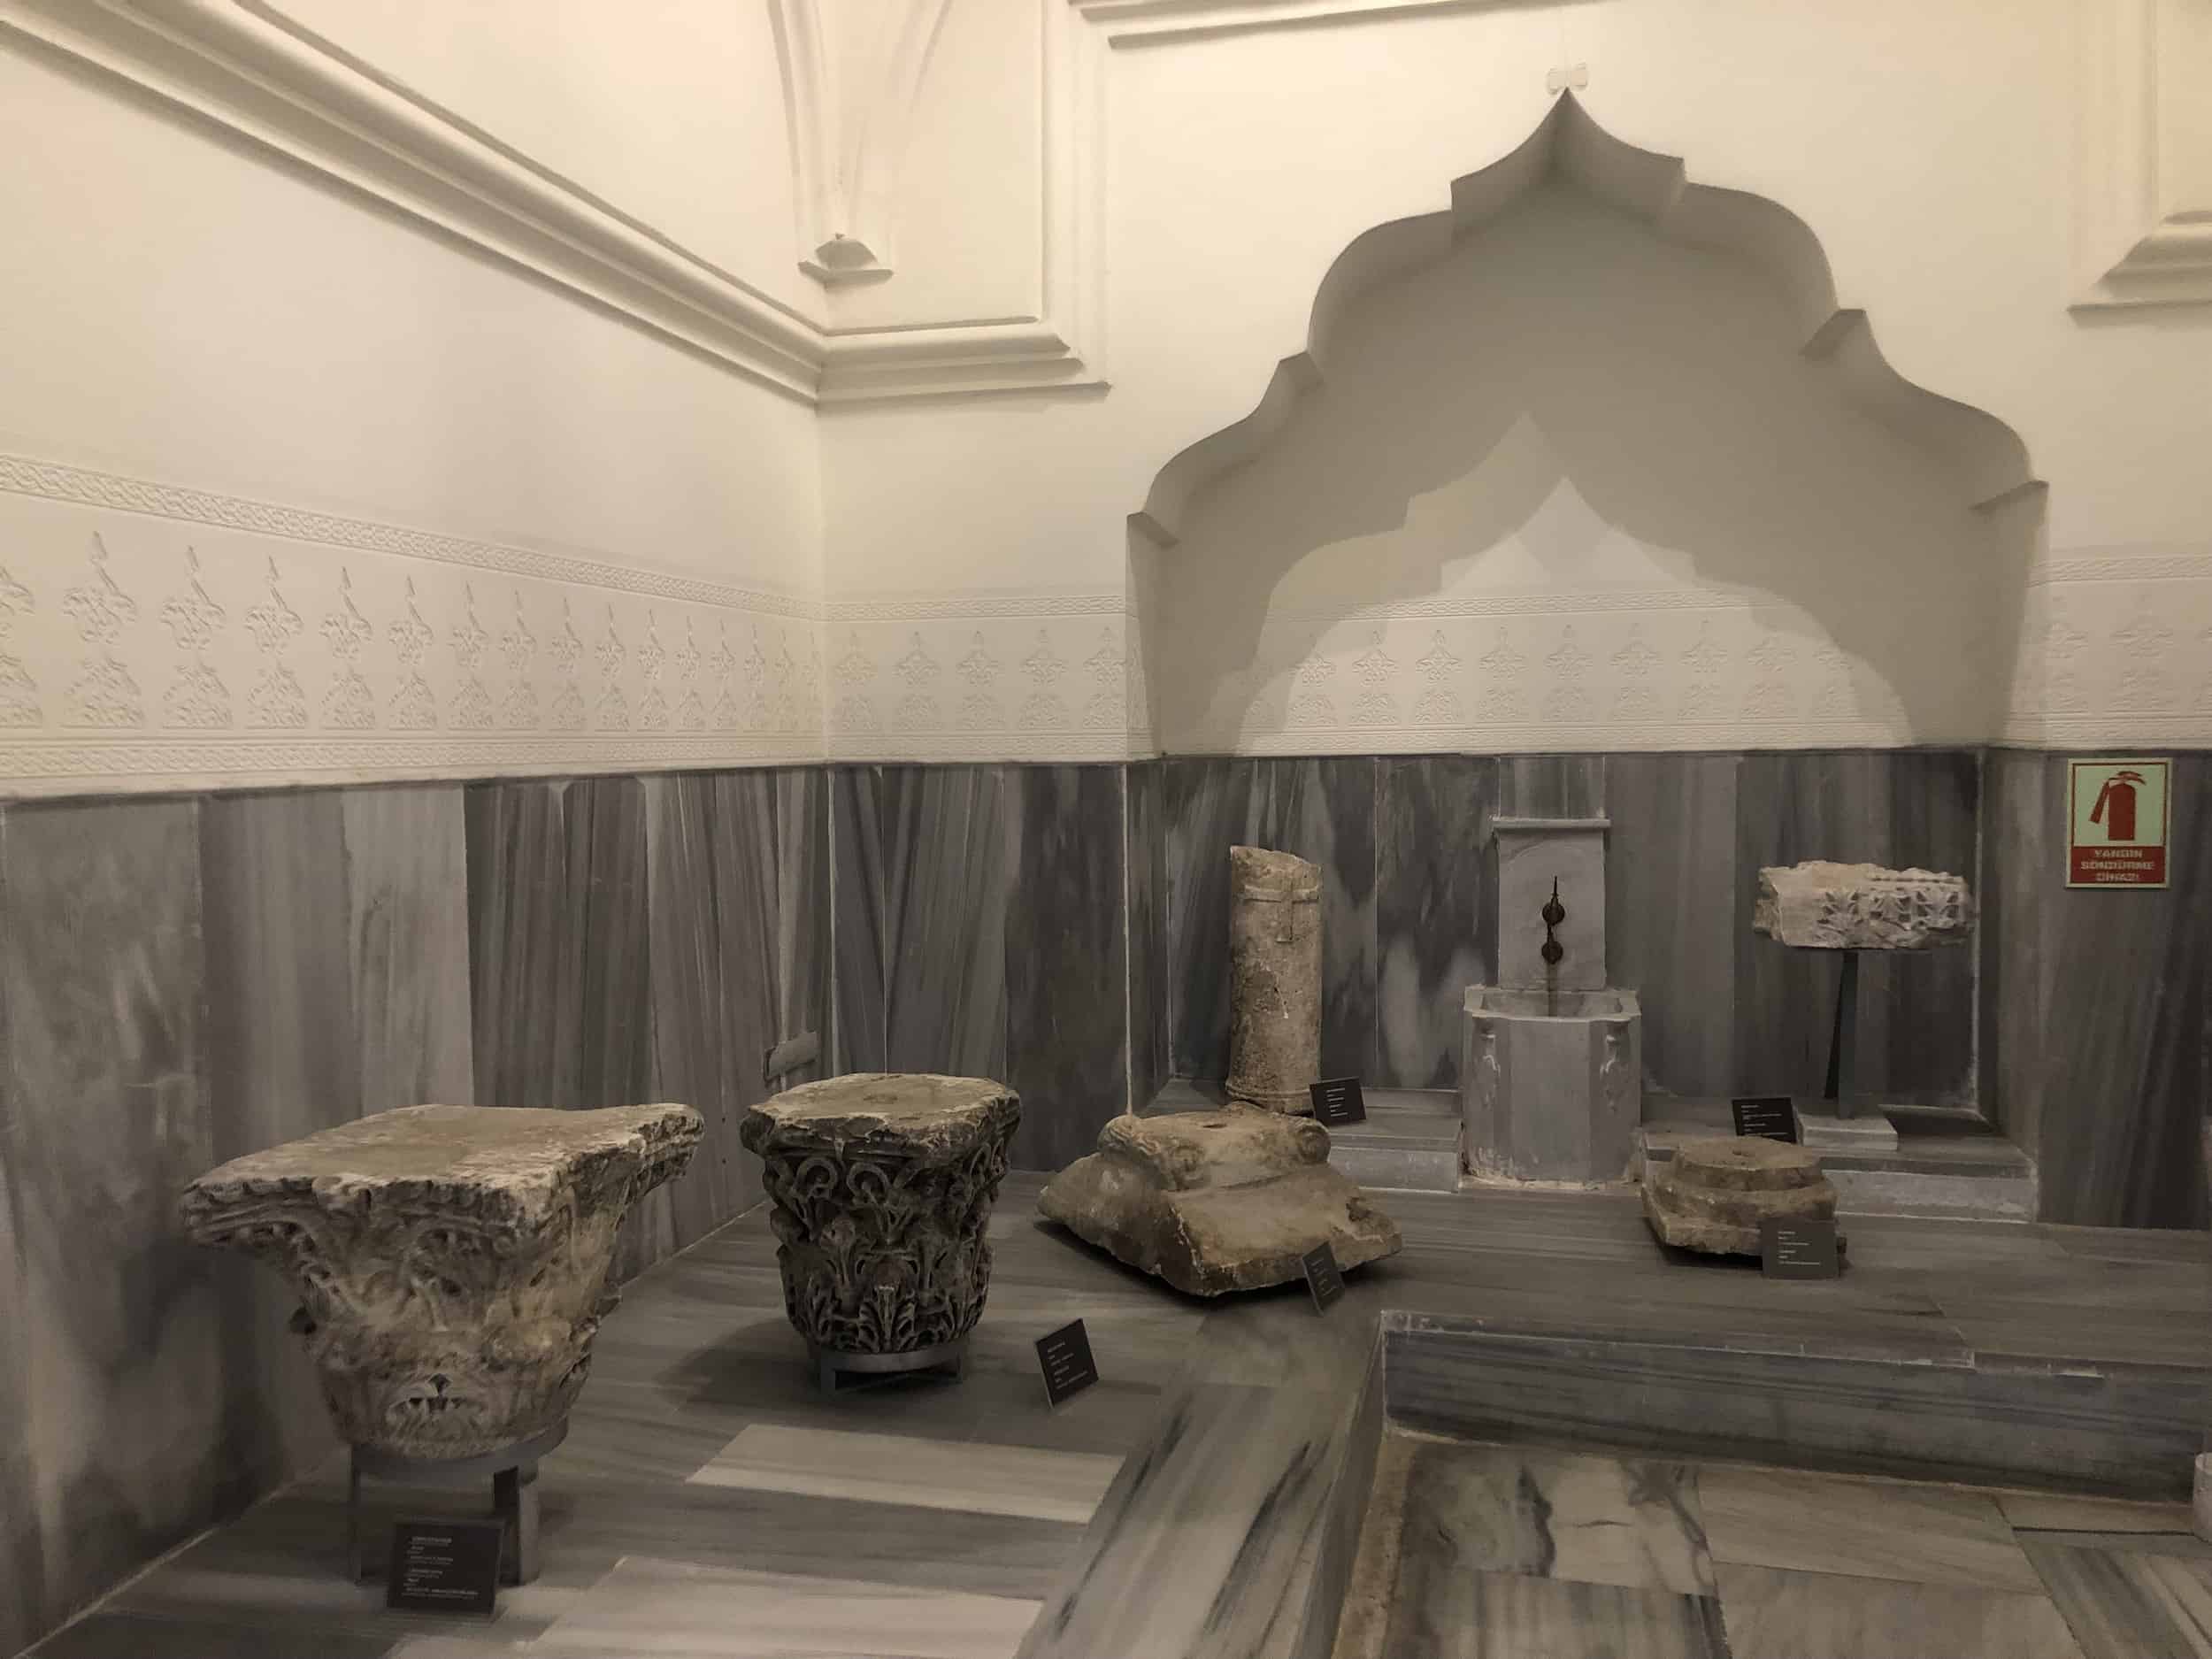 Archaeological items in the women's warm room at the Bayezid II Hamam (Bayezid II Turkish Bath Cultural Museum) in Beyazıt, Istanbul, Turkey